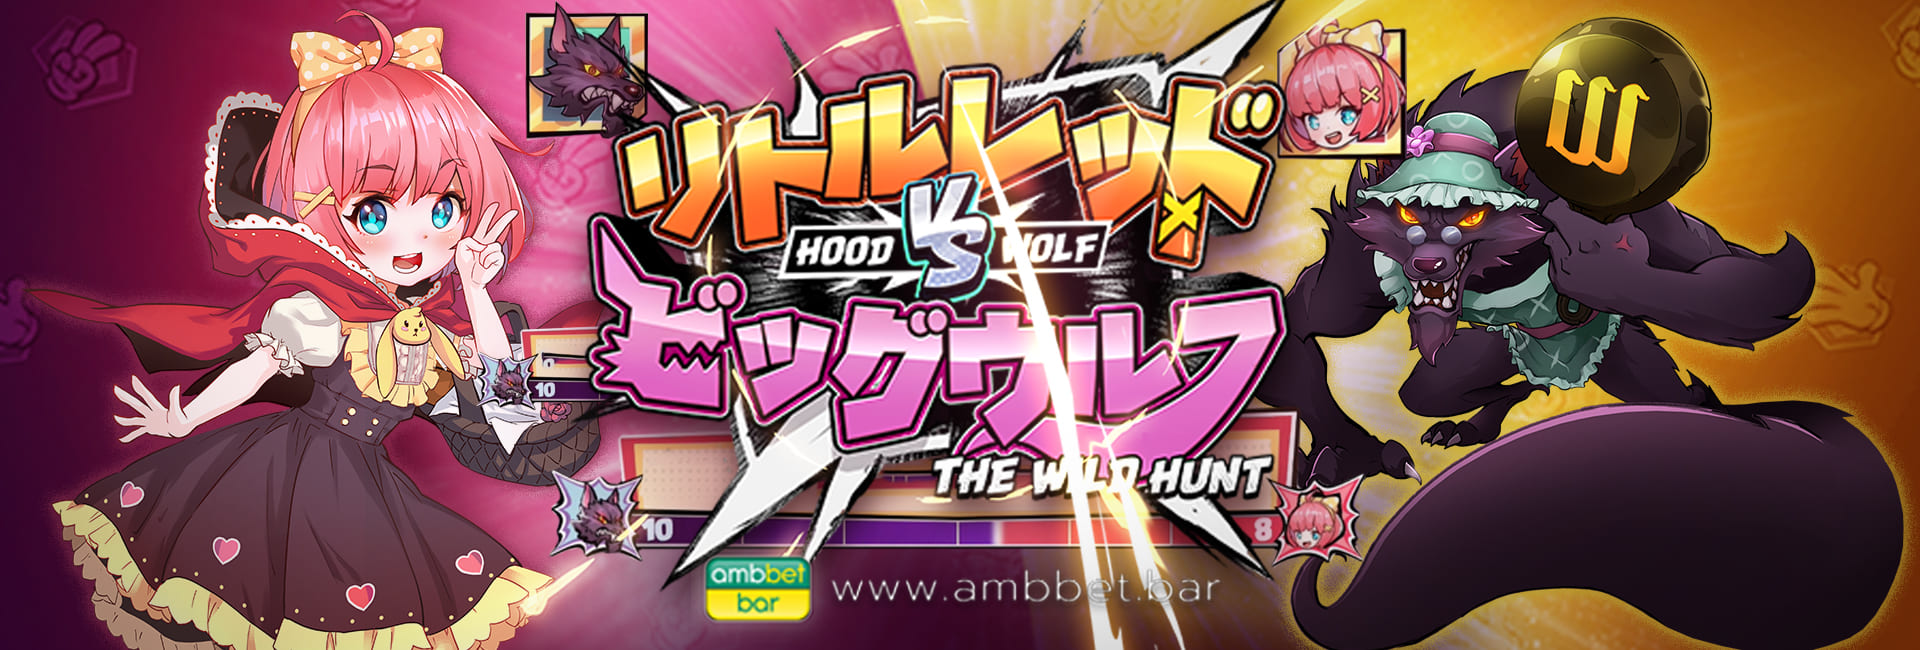 Hood vs Wolf